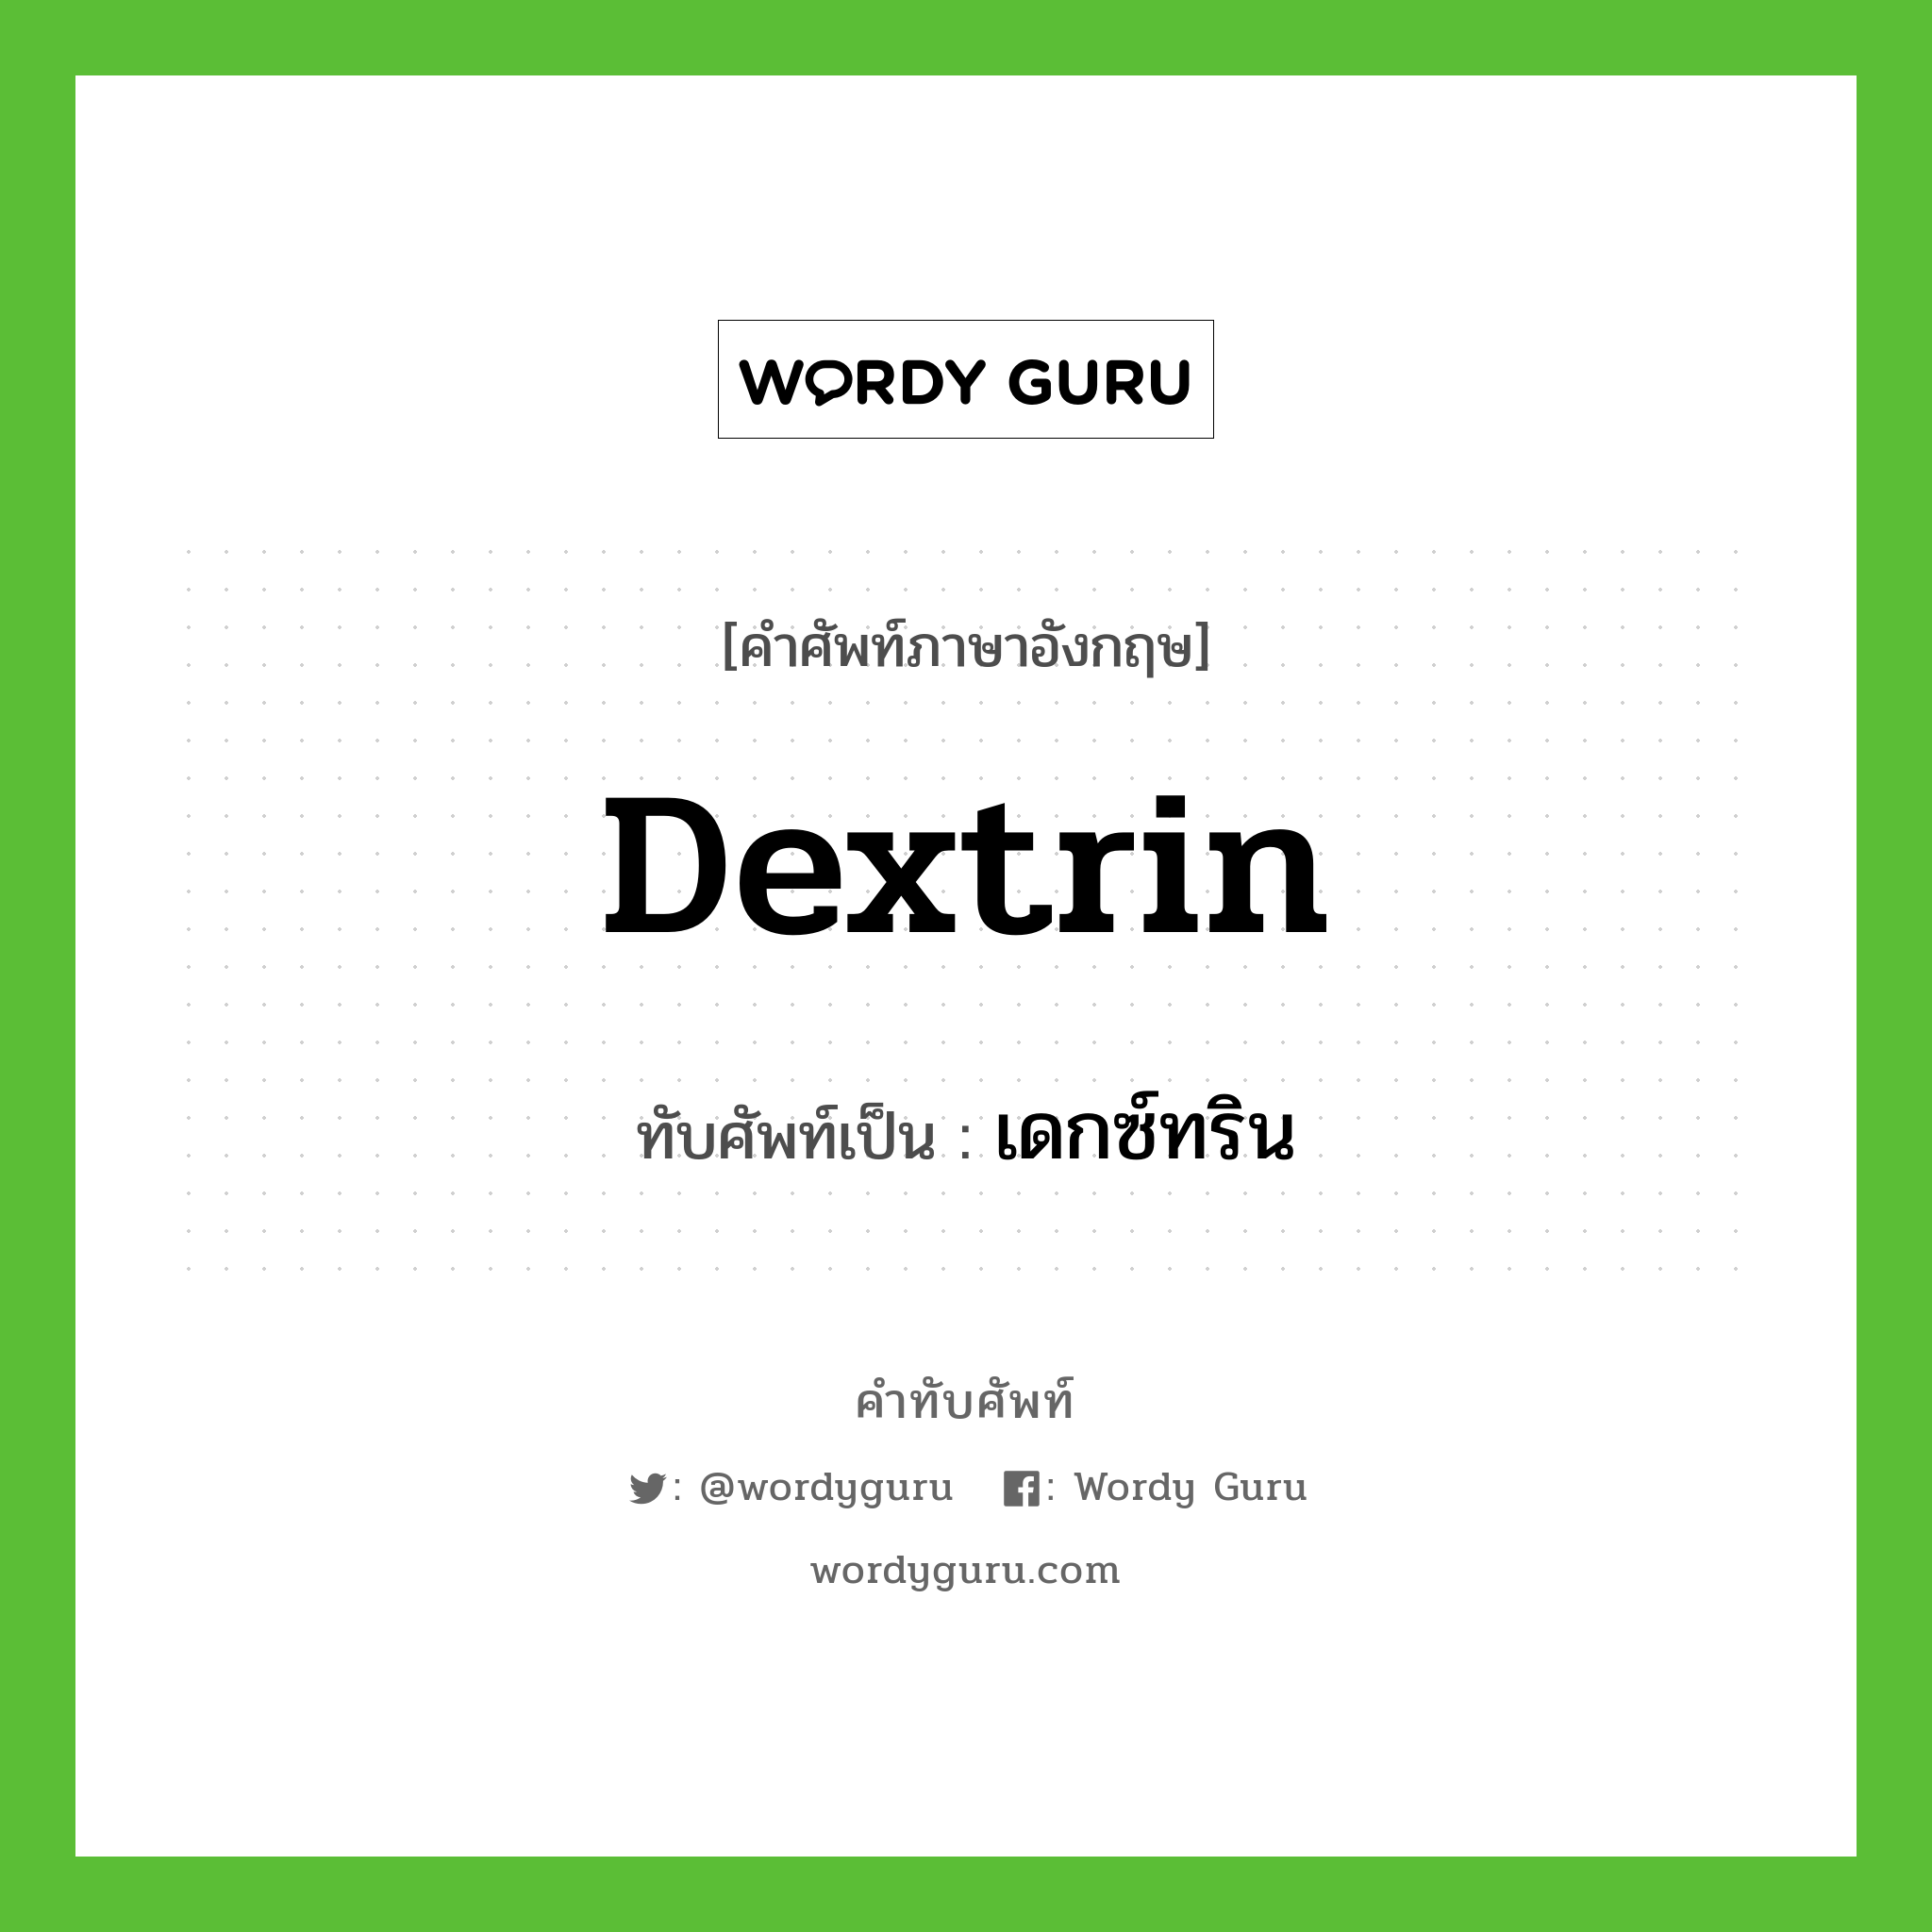 dextrin เขียนเป็นคำไทยว่าอะไร?, คำศัพท์ภาษาอังกฤษ dextrin ทับศัพท์เป็น เดกซ์ทริน